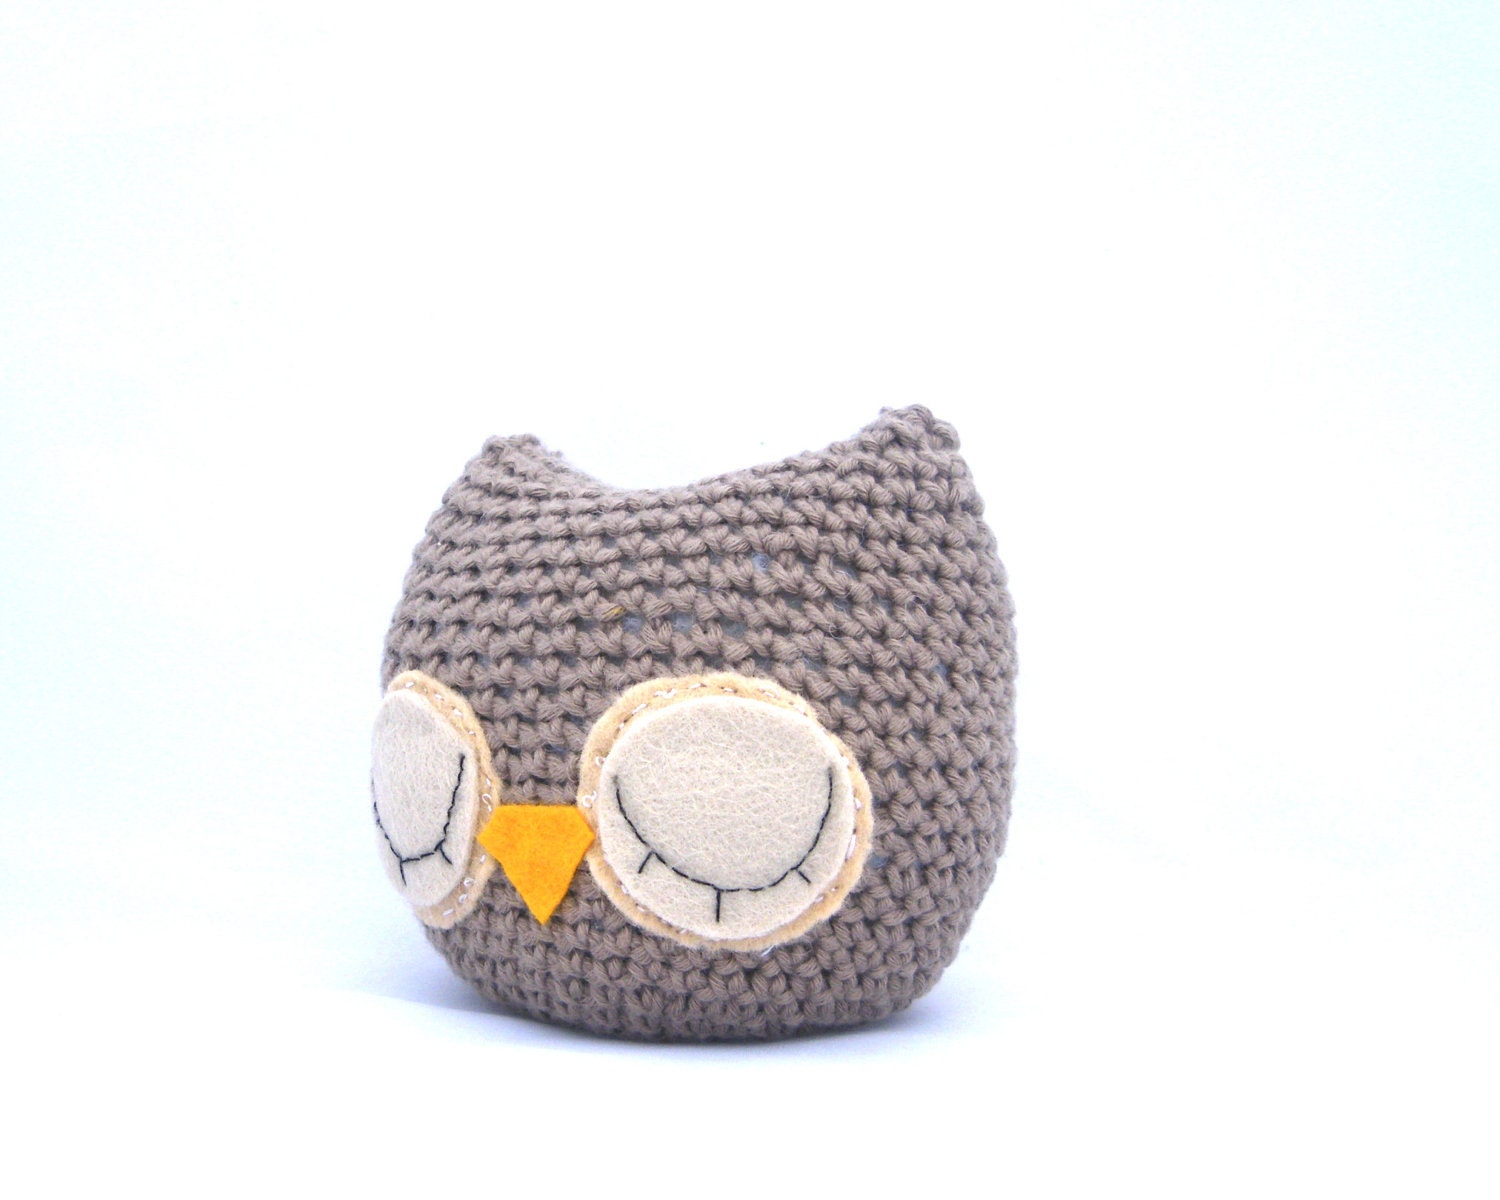 owl organic plush amigurumi 100% cotton beige crochet sleepy sleeping stuffed woodland animal OOAK ready to ship